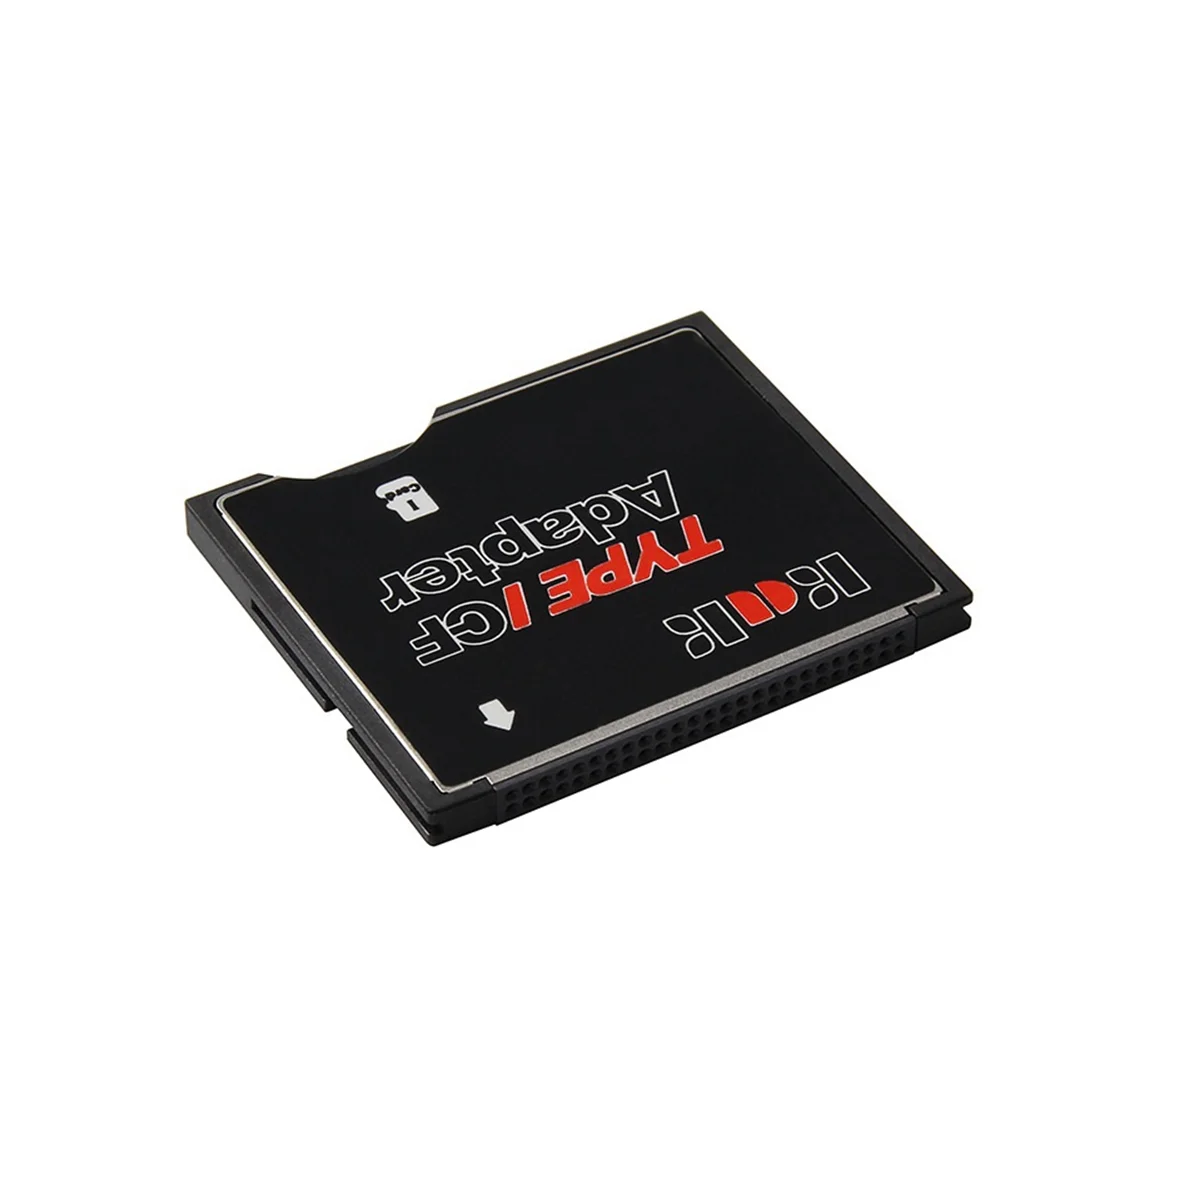 

Адаптер для карты памяти один порт SDHC SDXC TF на CF адаптер для камеры тип I преобразователь карт